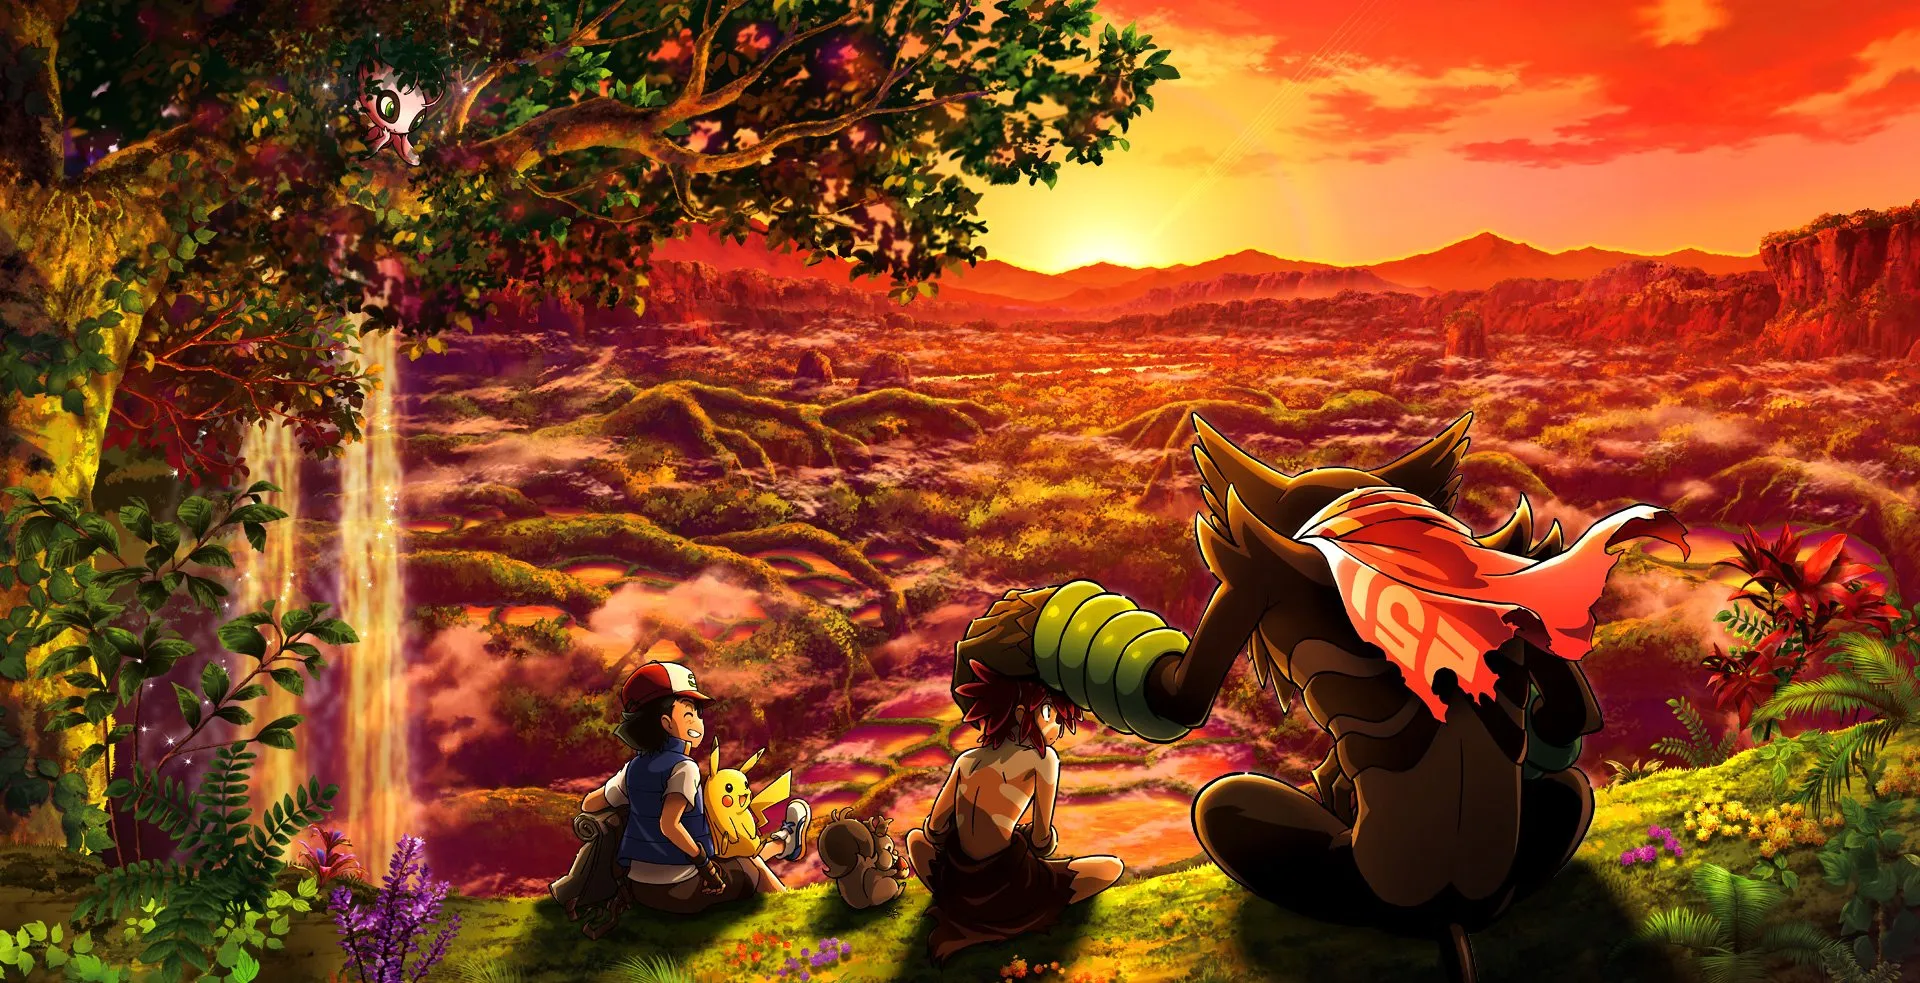 Zarude & Shiny Celebi 6IV Pokémon the Movie Coco Pokemon Sword & Shield  TRADING